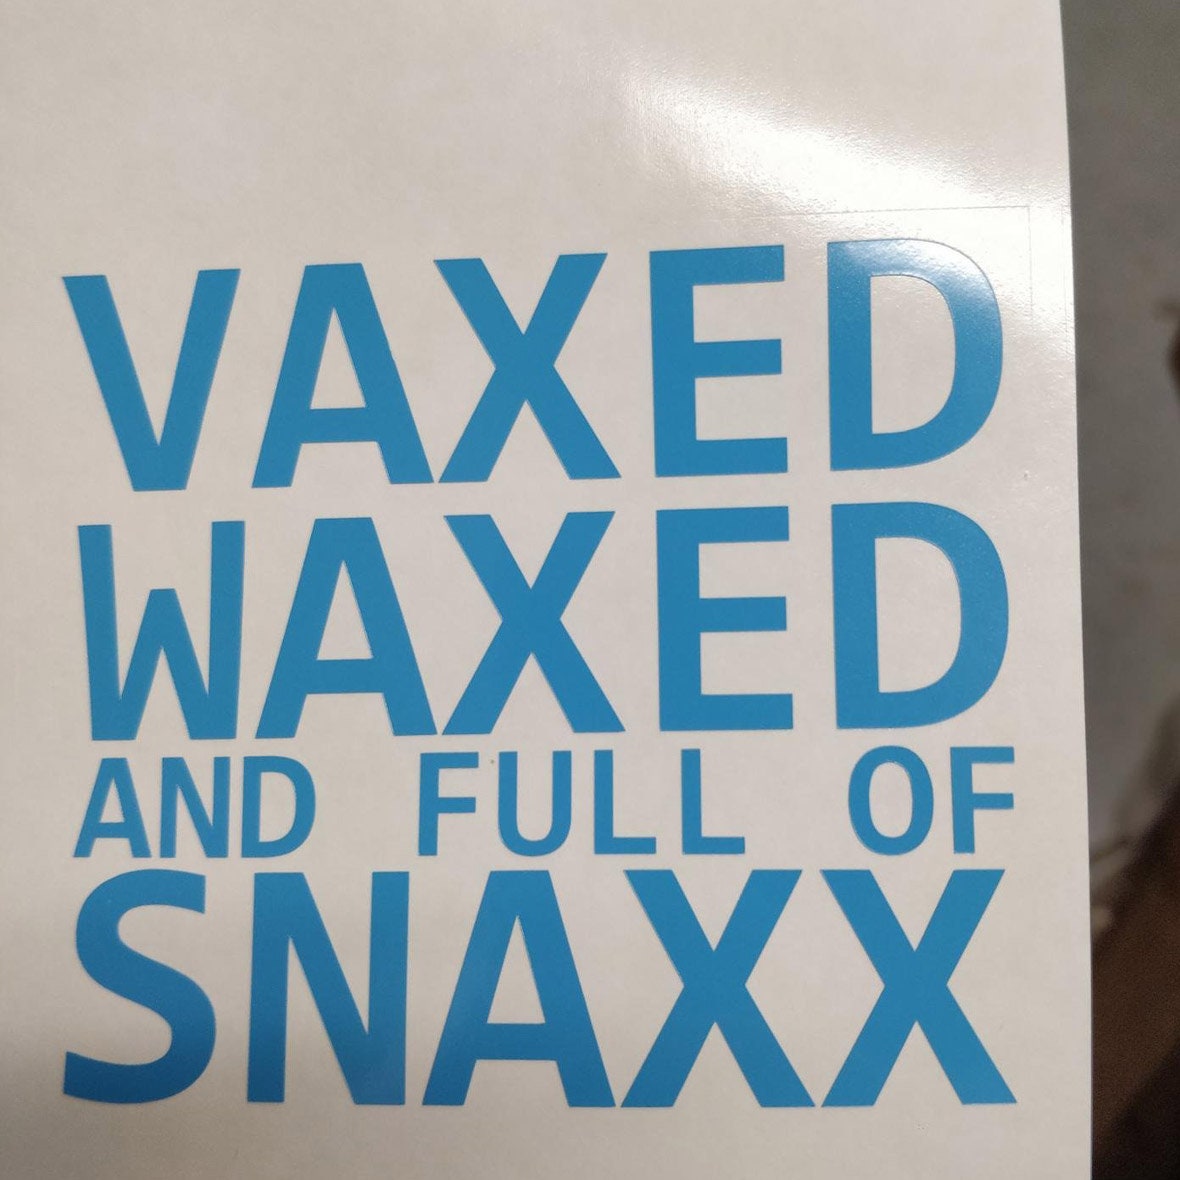 Vaxed Waxed Snacks Decal